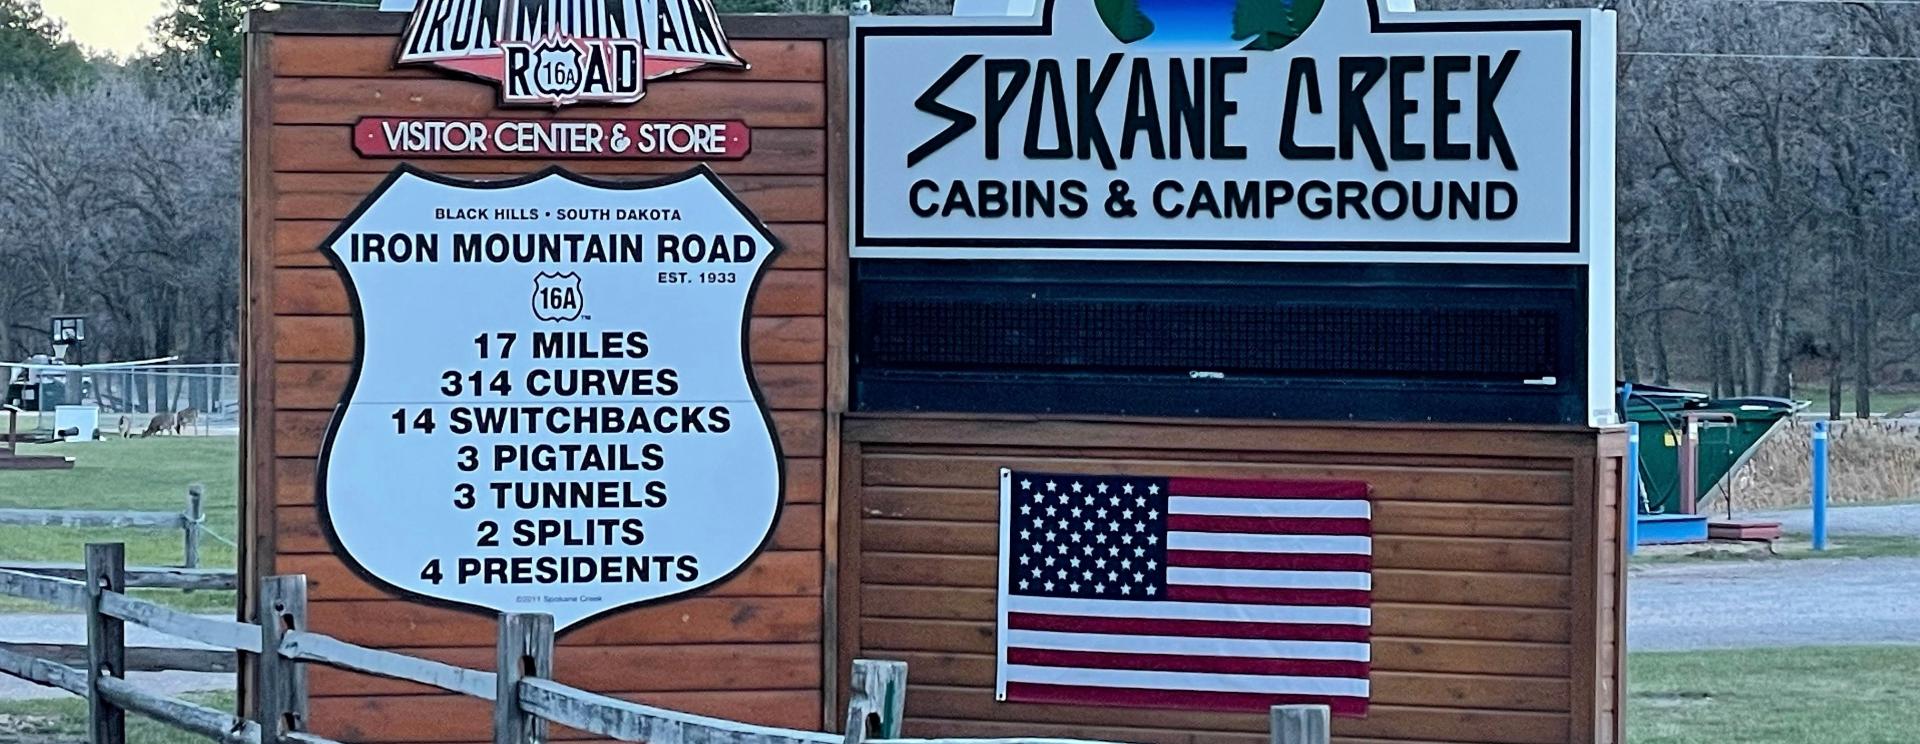 Spokane Creek Cabins & Campgound